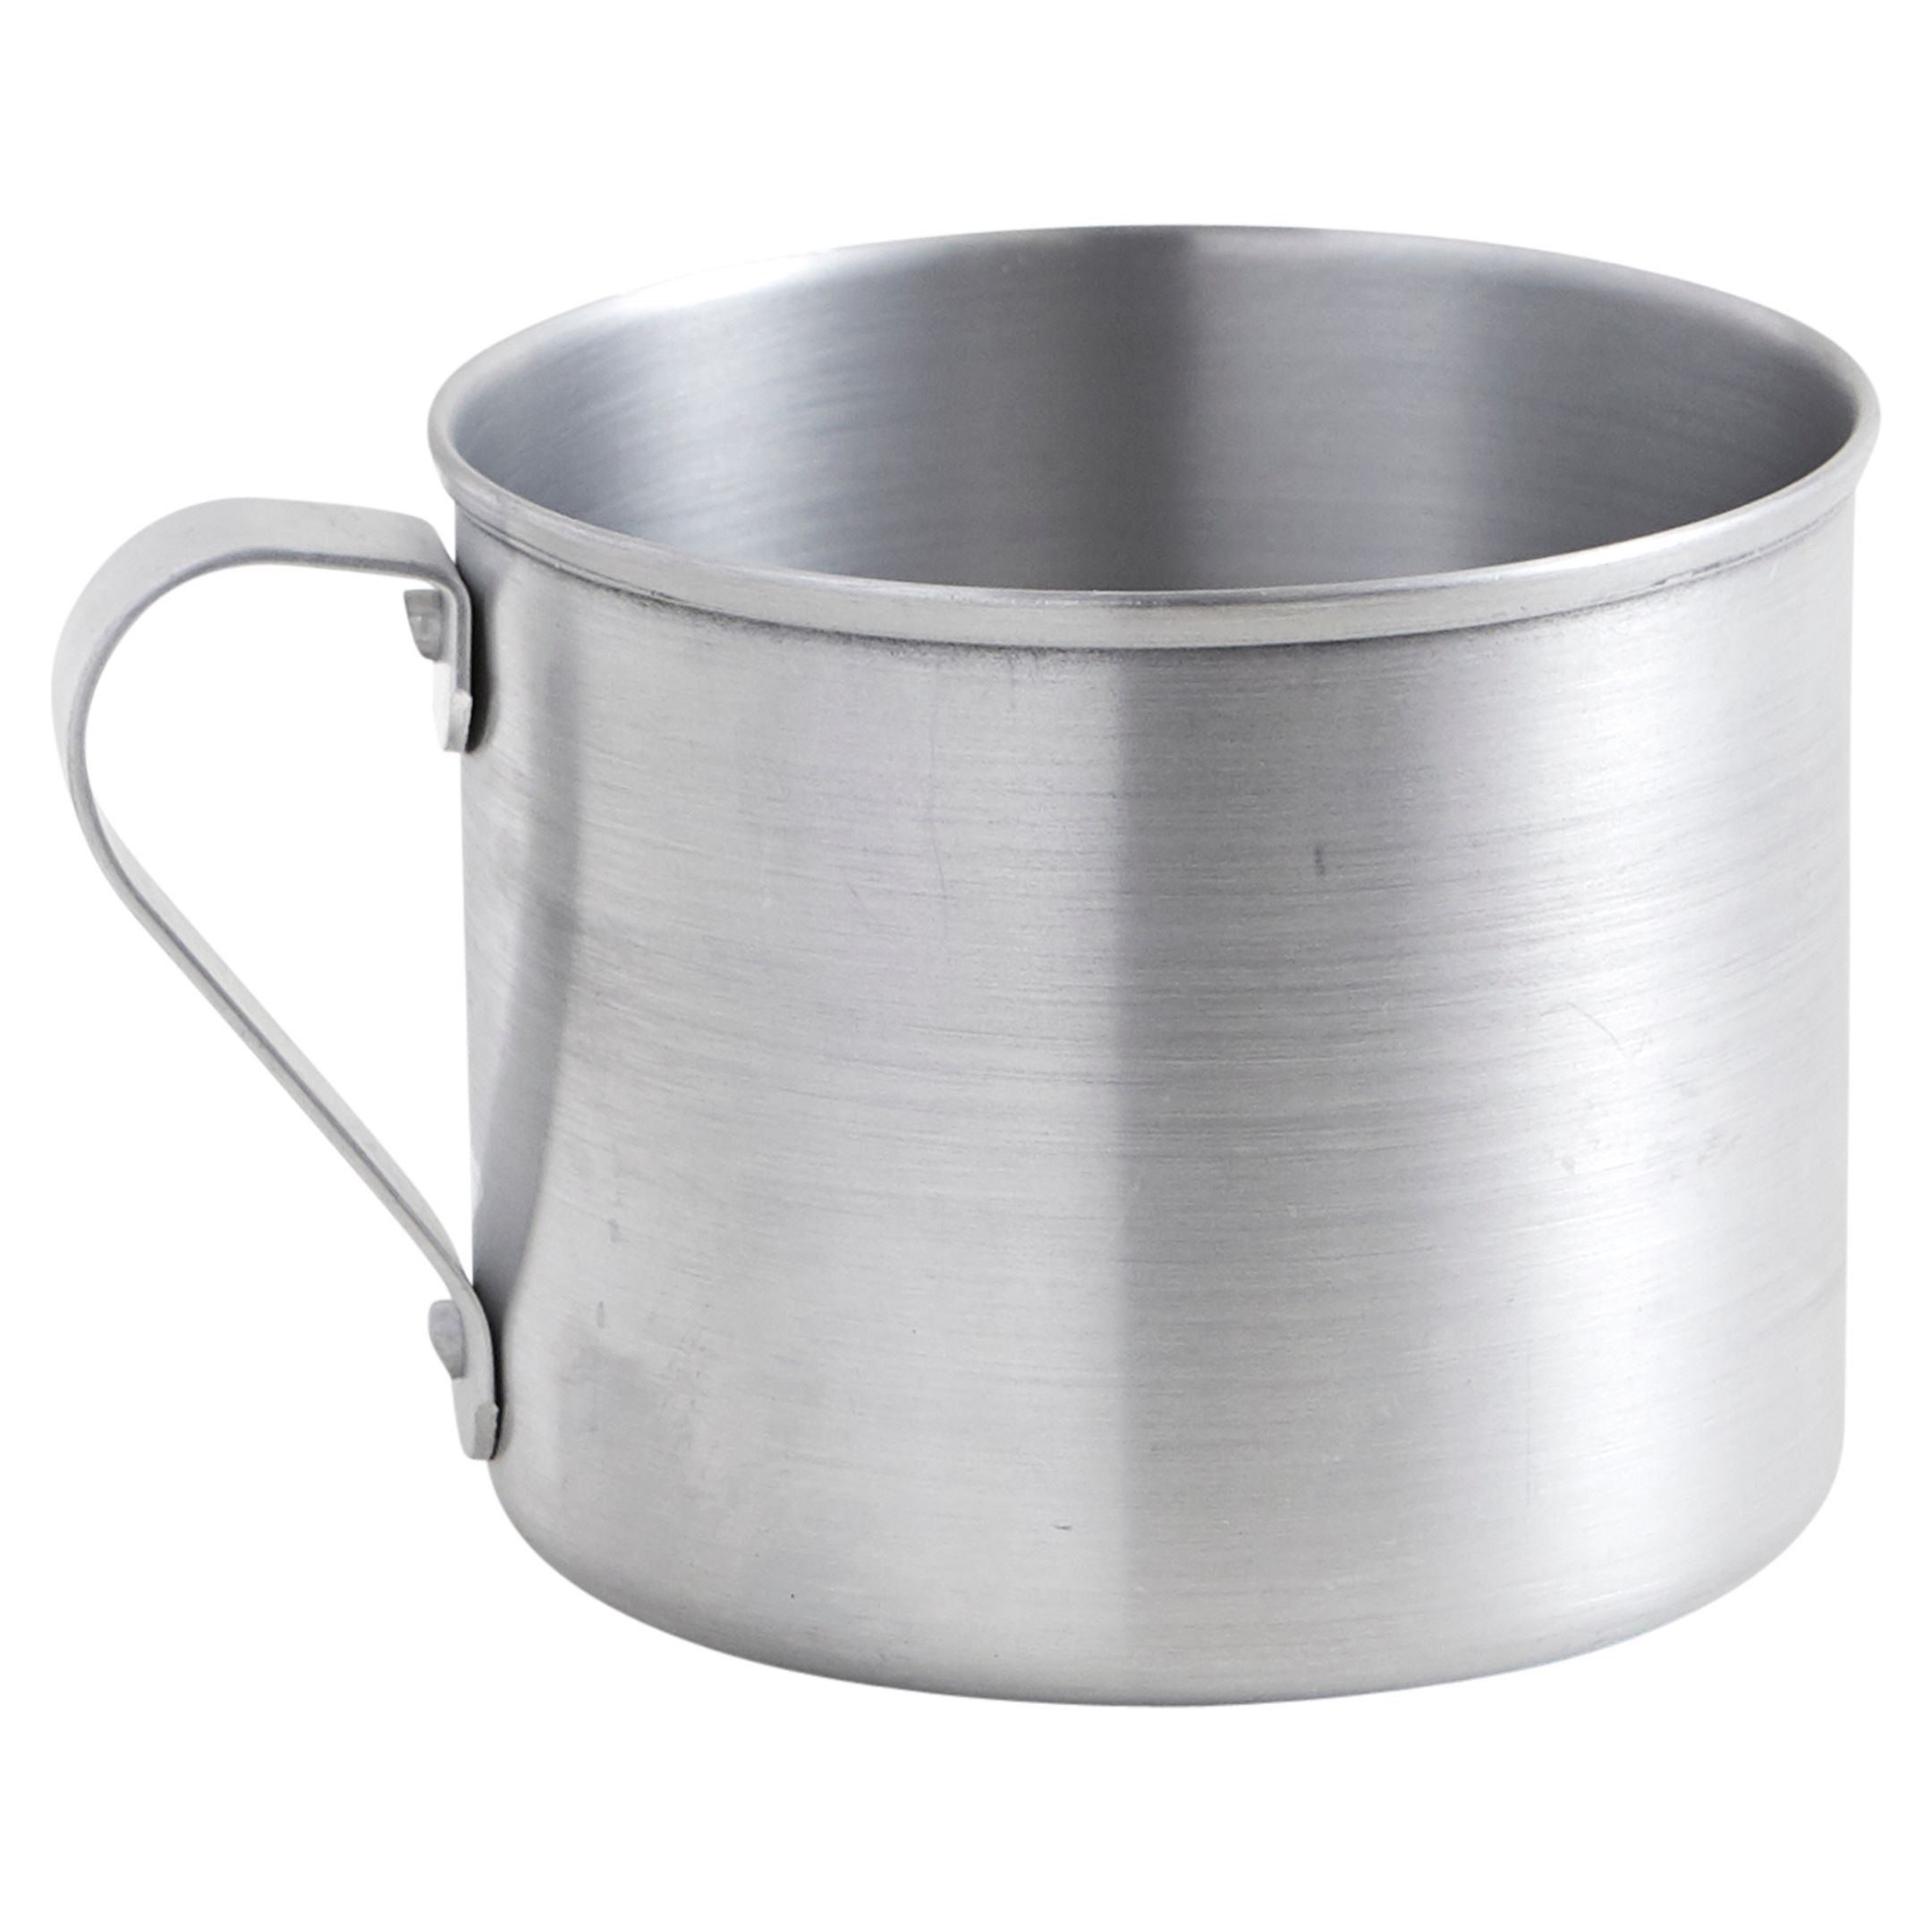 Imusa 0.7 Quart Capacity Aluminum Mug for Stovetop Use or Camping, Silver - image 1 of 11